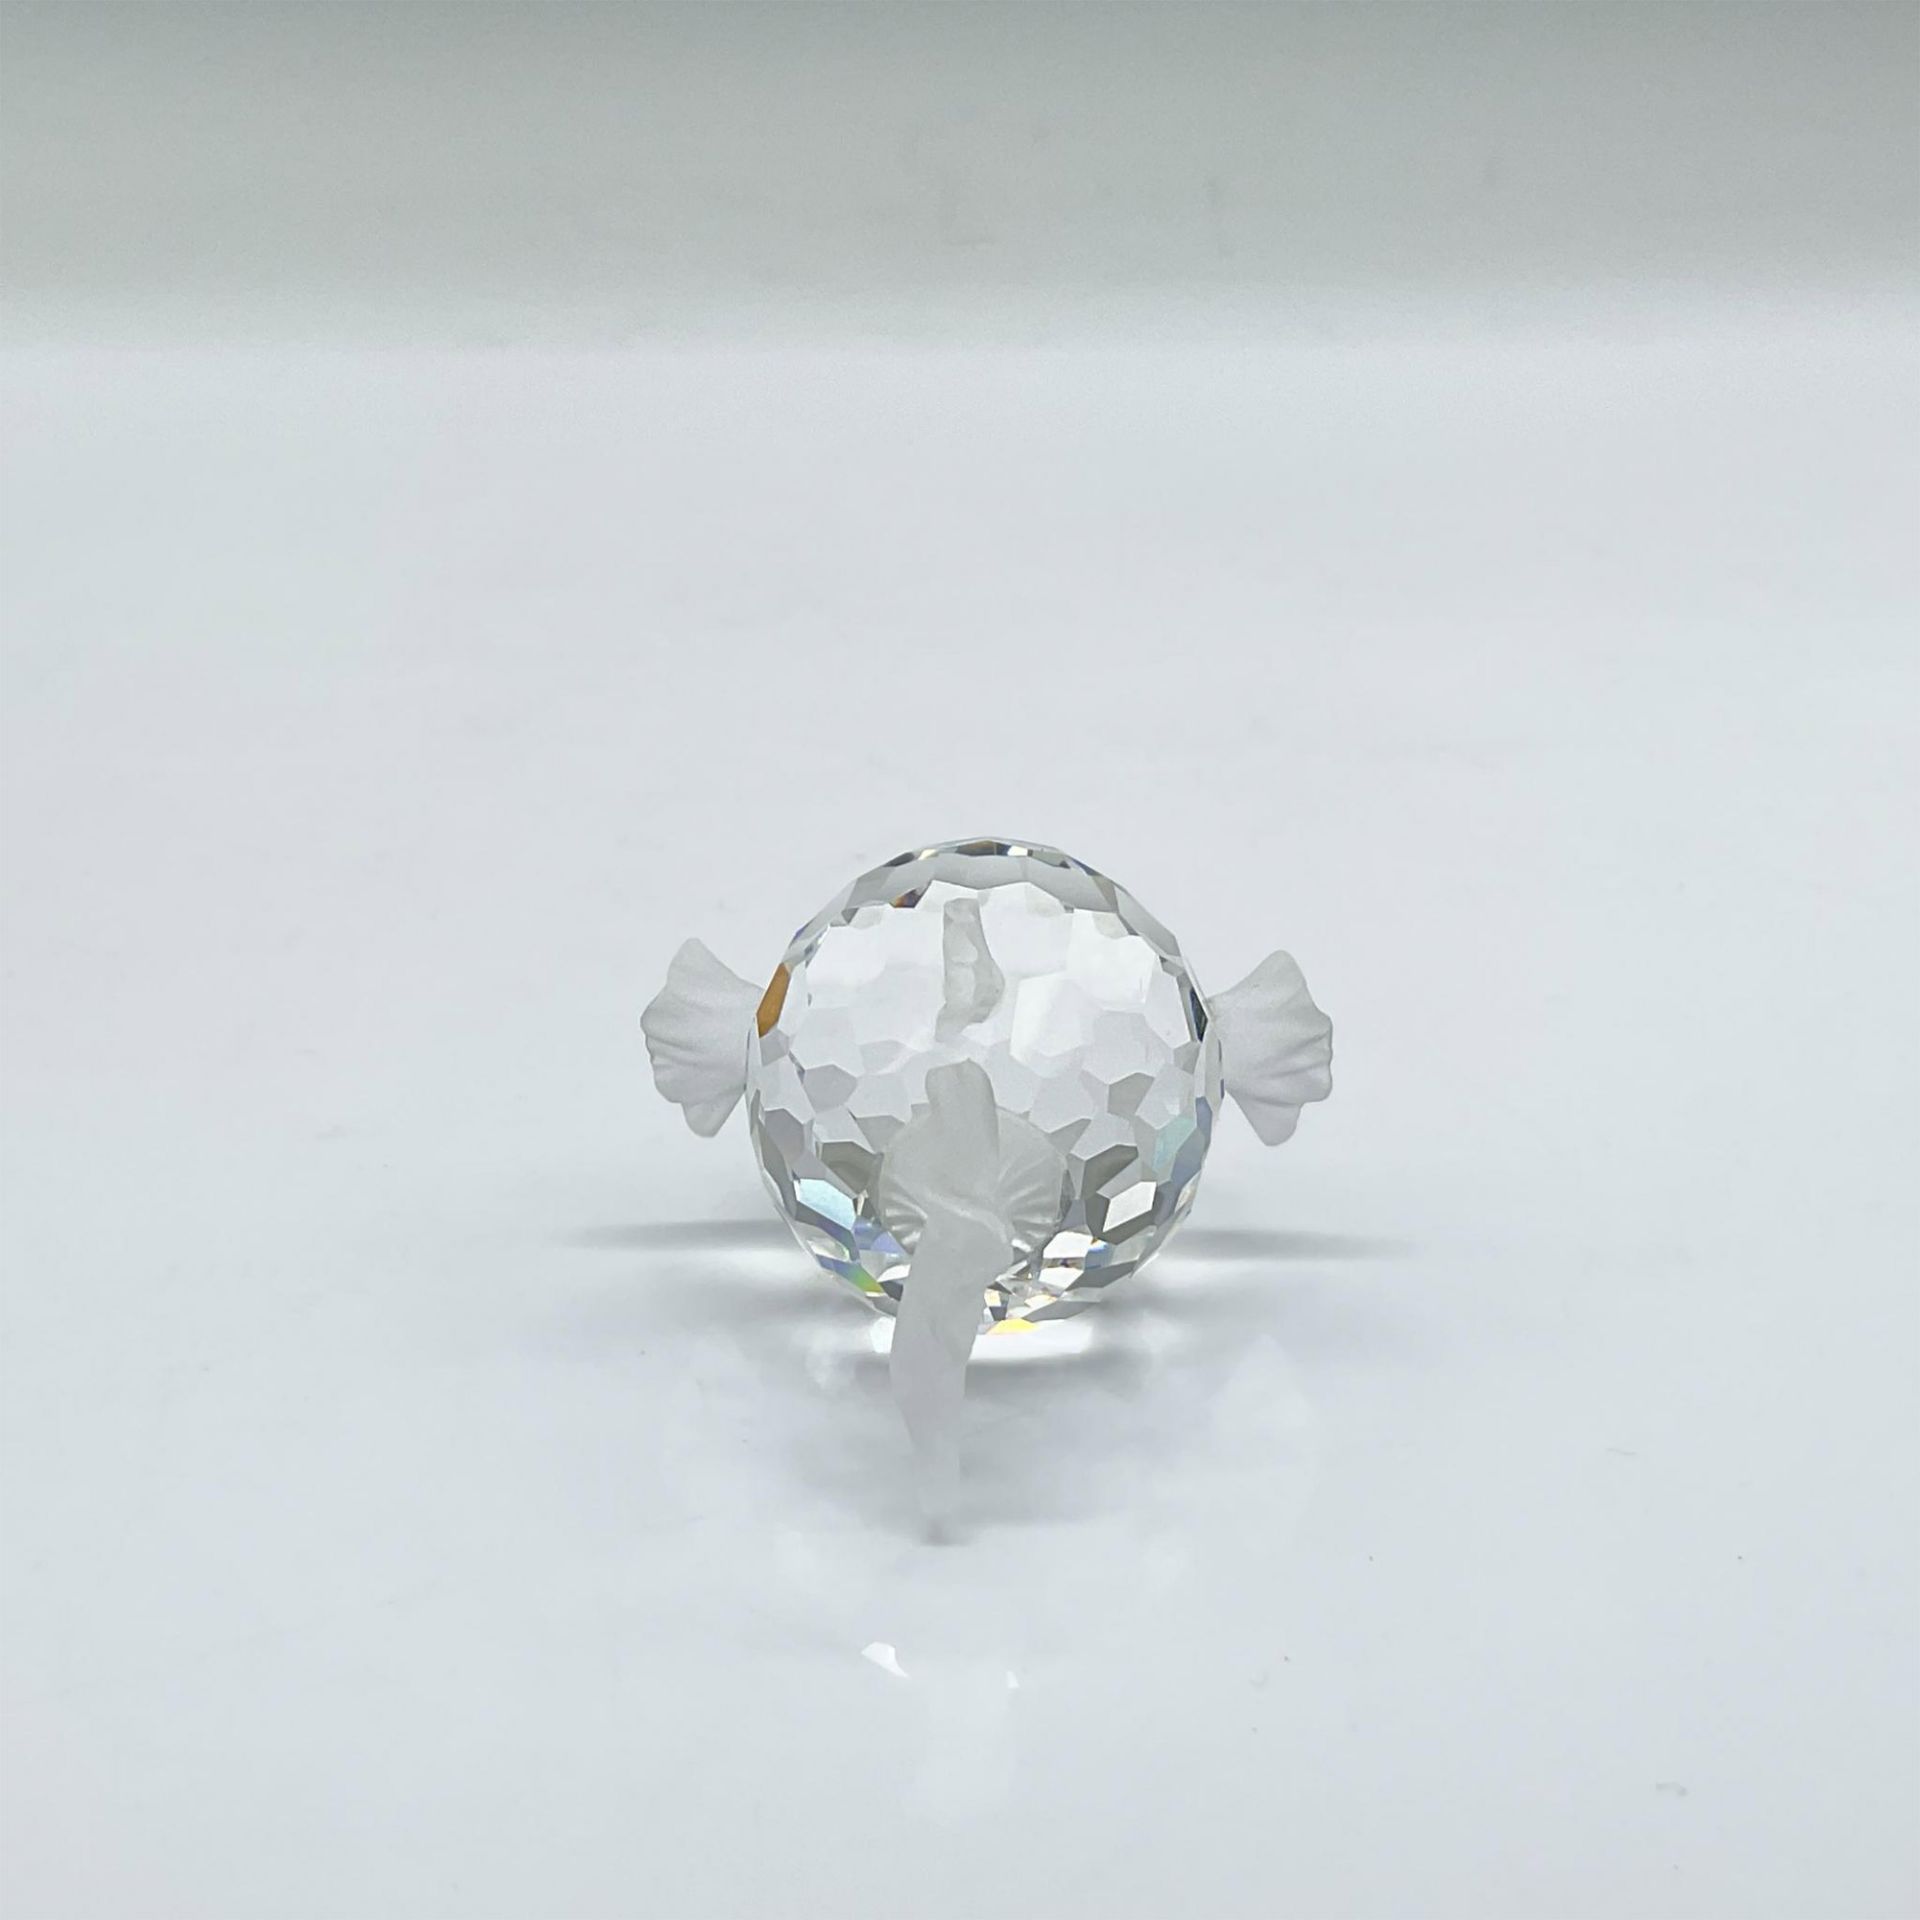 Swarovski Silver Crystal Figurine, Small Blowfish - Image 4 of 6